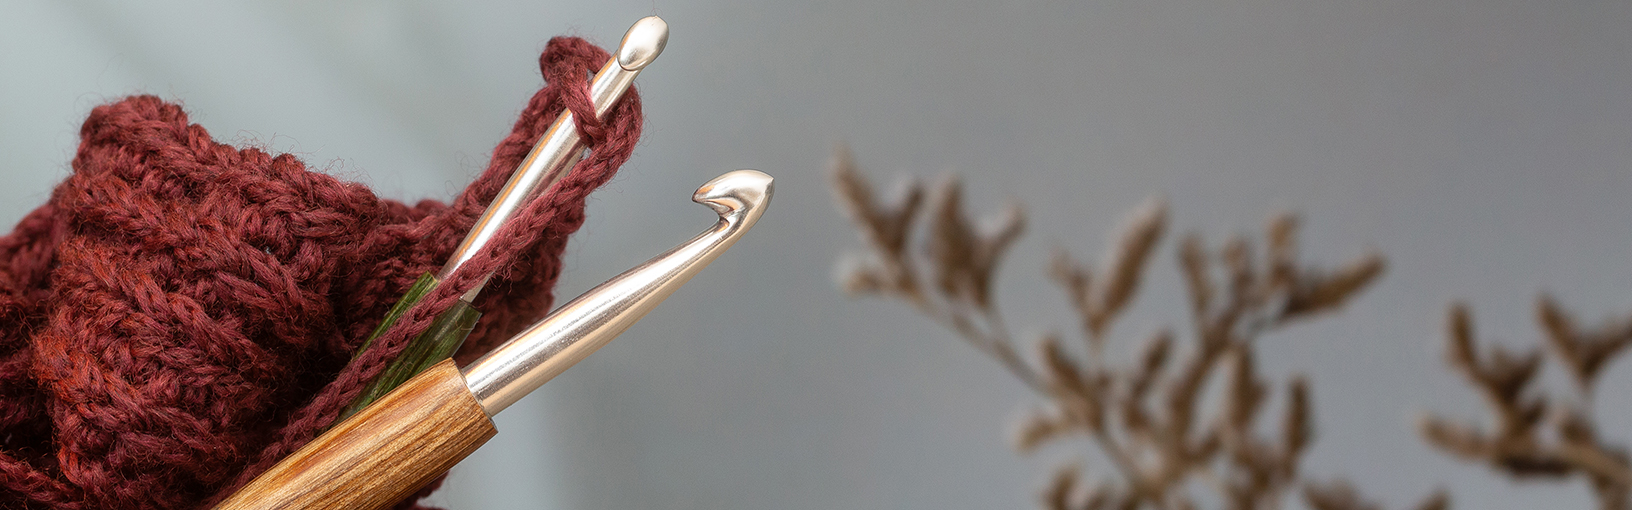 High quality yarns for knitting, crocheting & felting Lana Grossa Yarns | Sock yarns | 8-ply